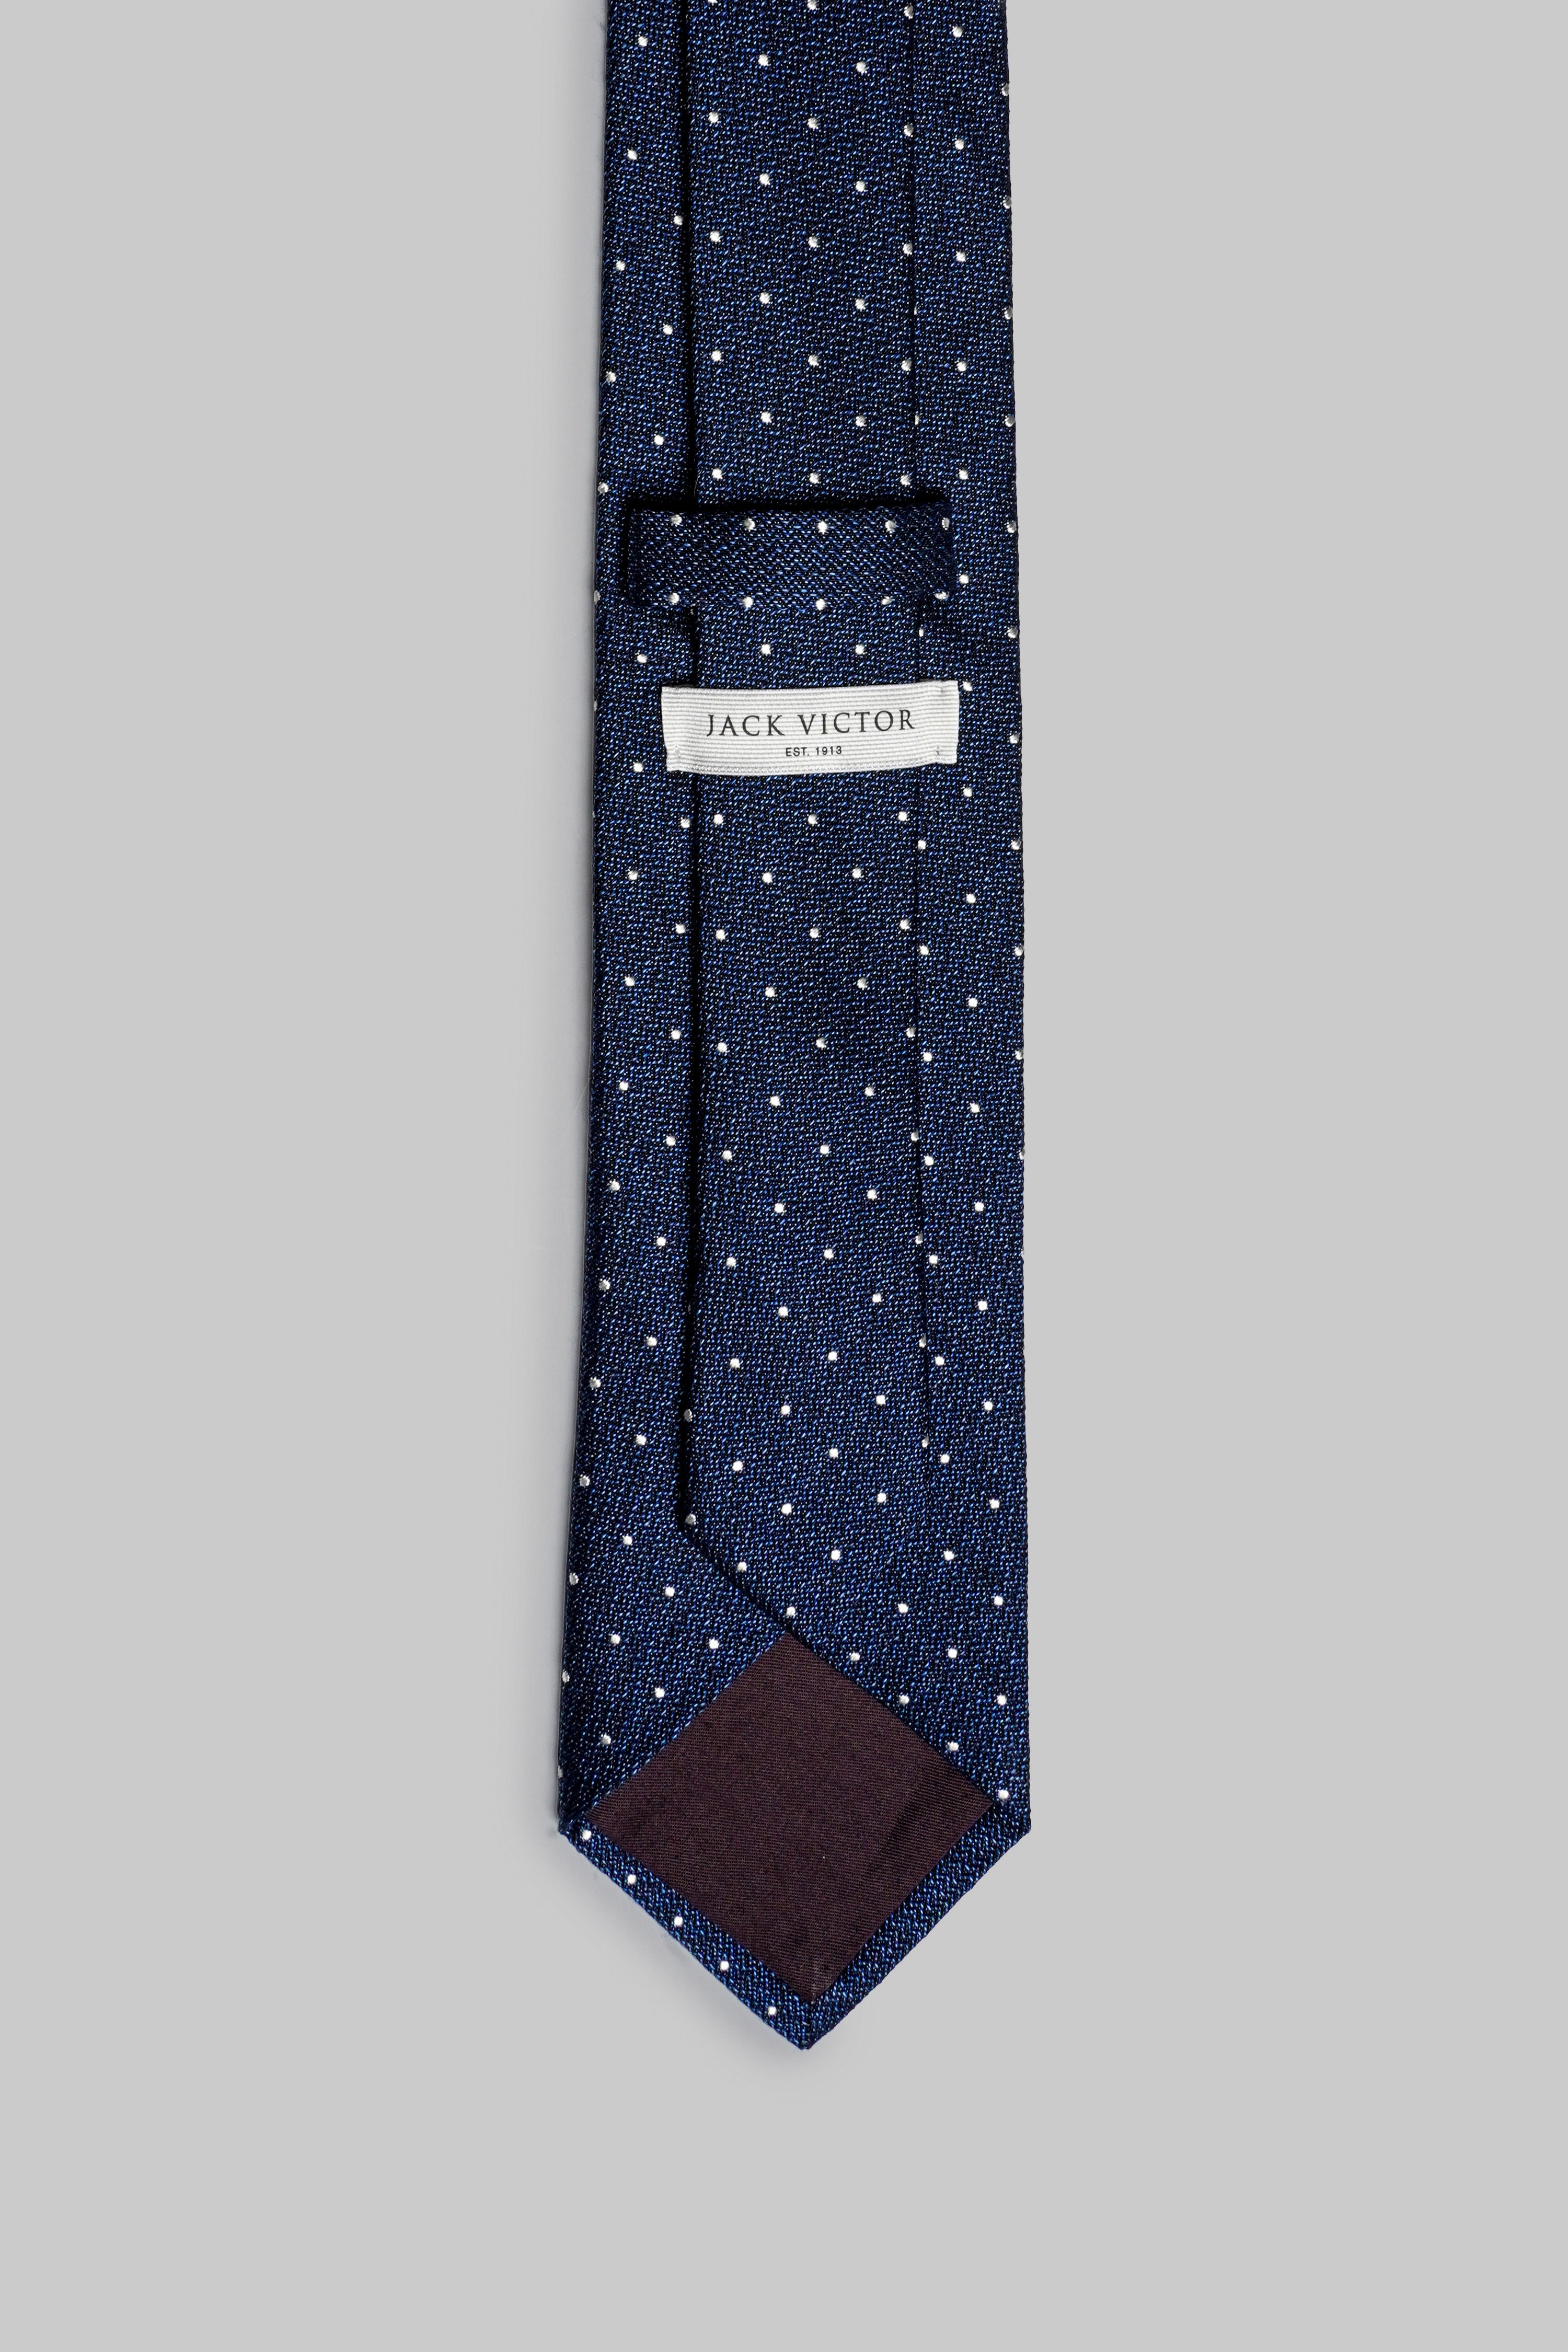 Vue alternative 2 Pindot cravate tissée en bleu palais